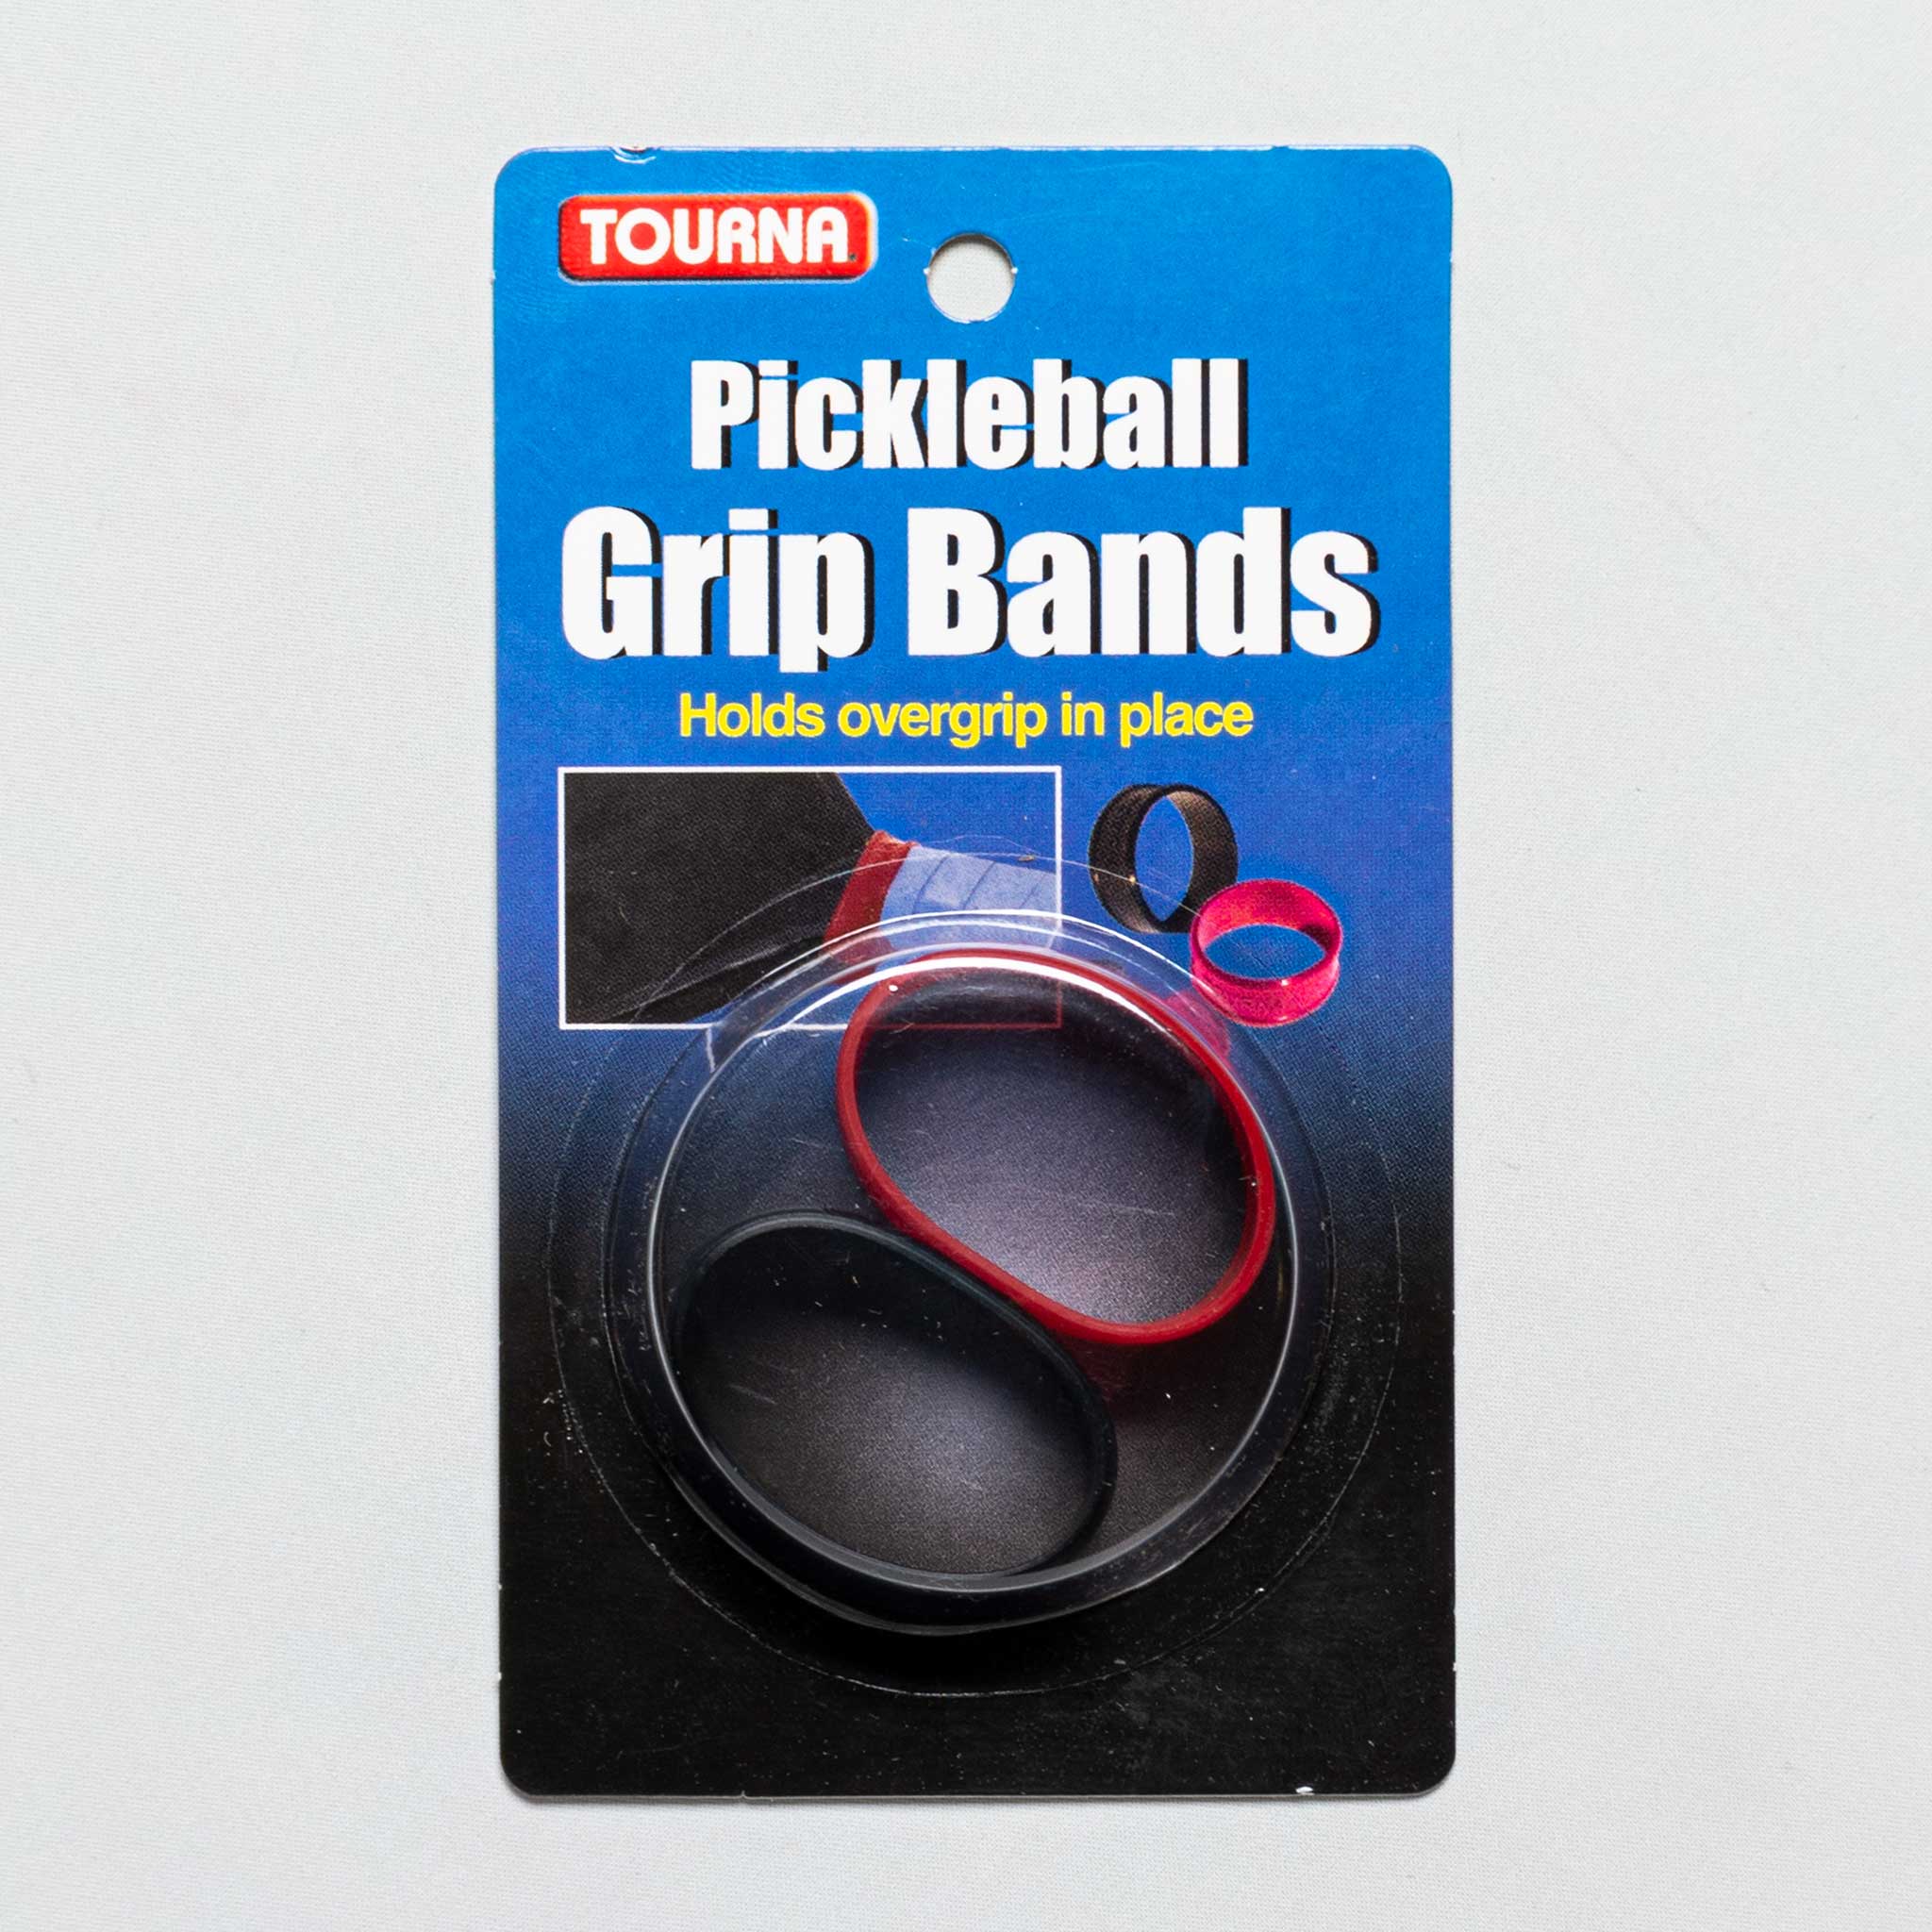 Tourna Pickleball Grip Bands